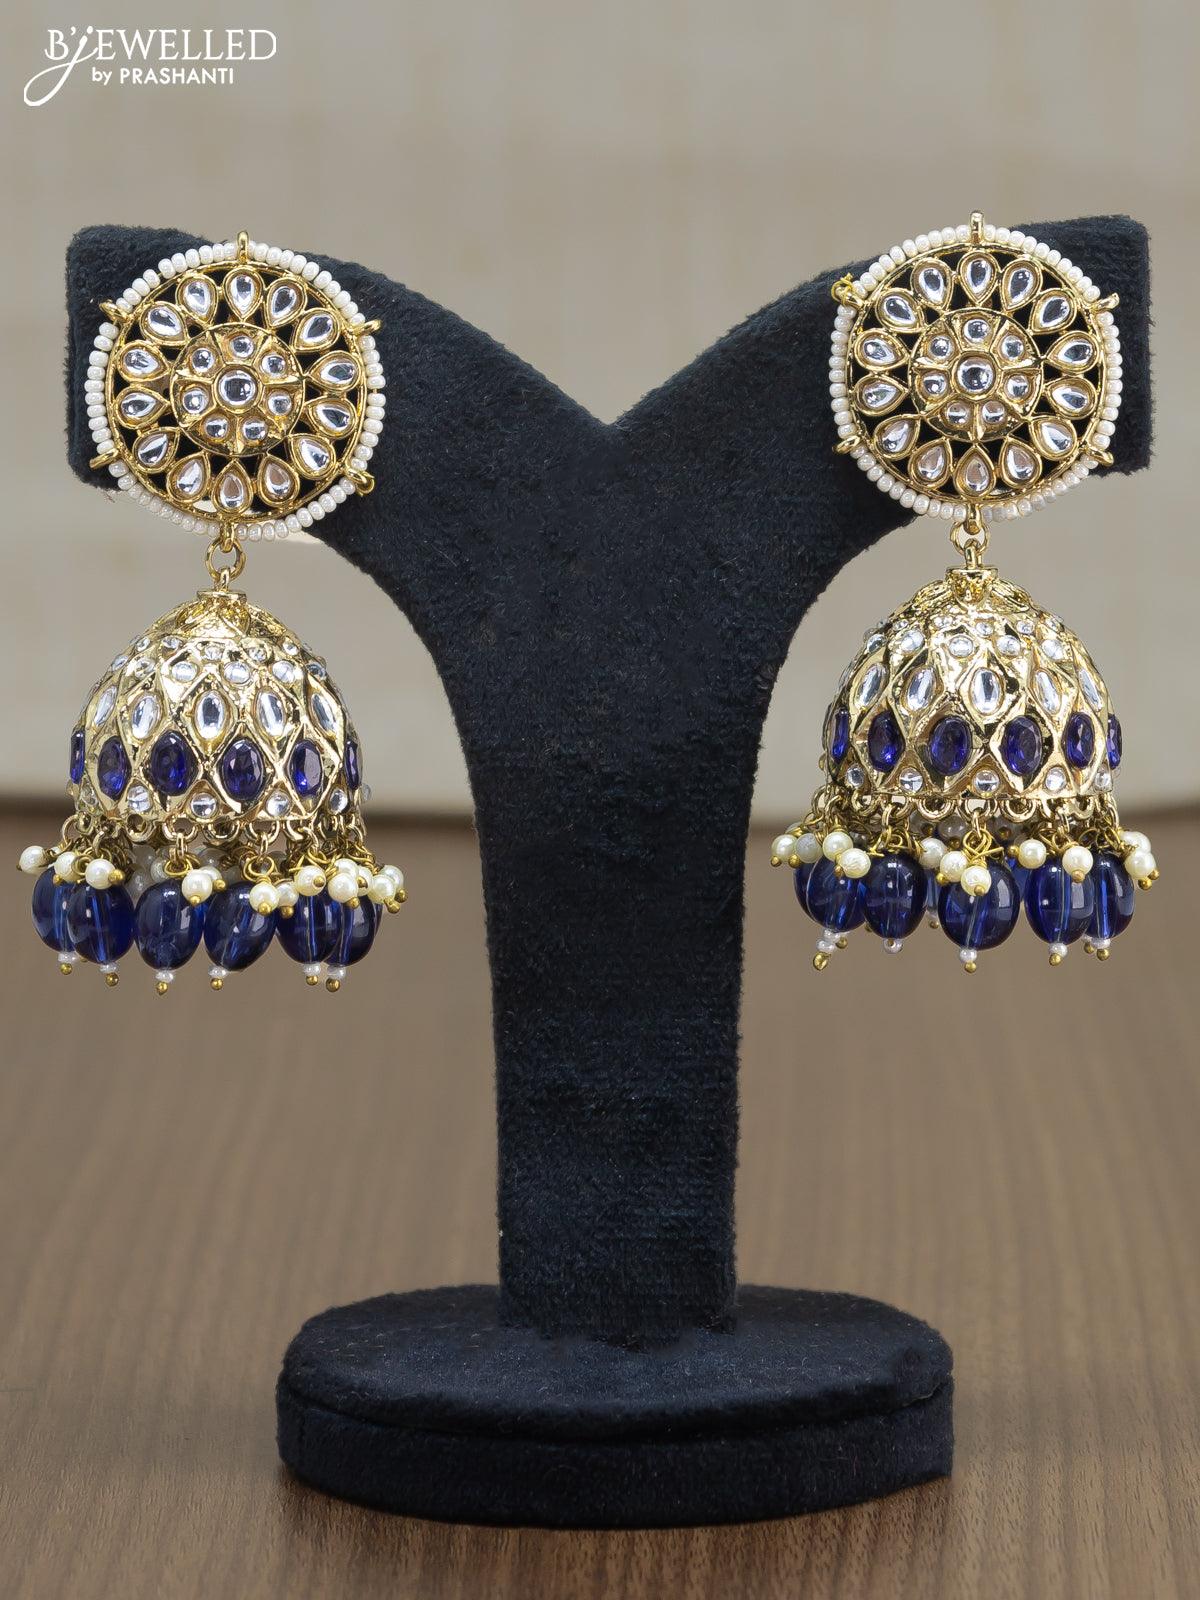 Jhumka Indian Gold Jhumkas Women CZ Jhumka Indian Gold Jhumka Earrings  Bollywood | eBay